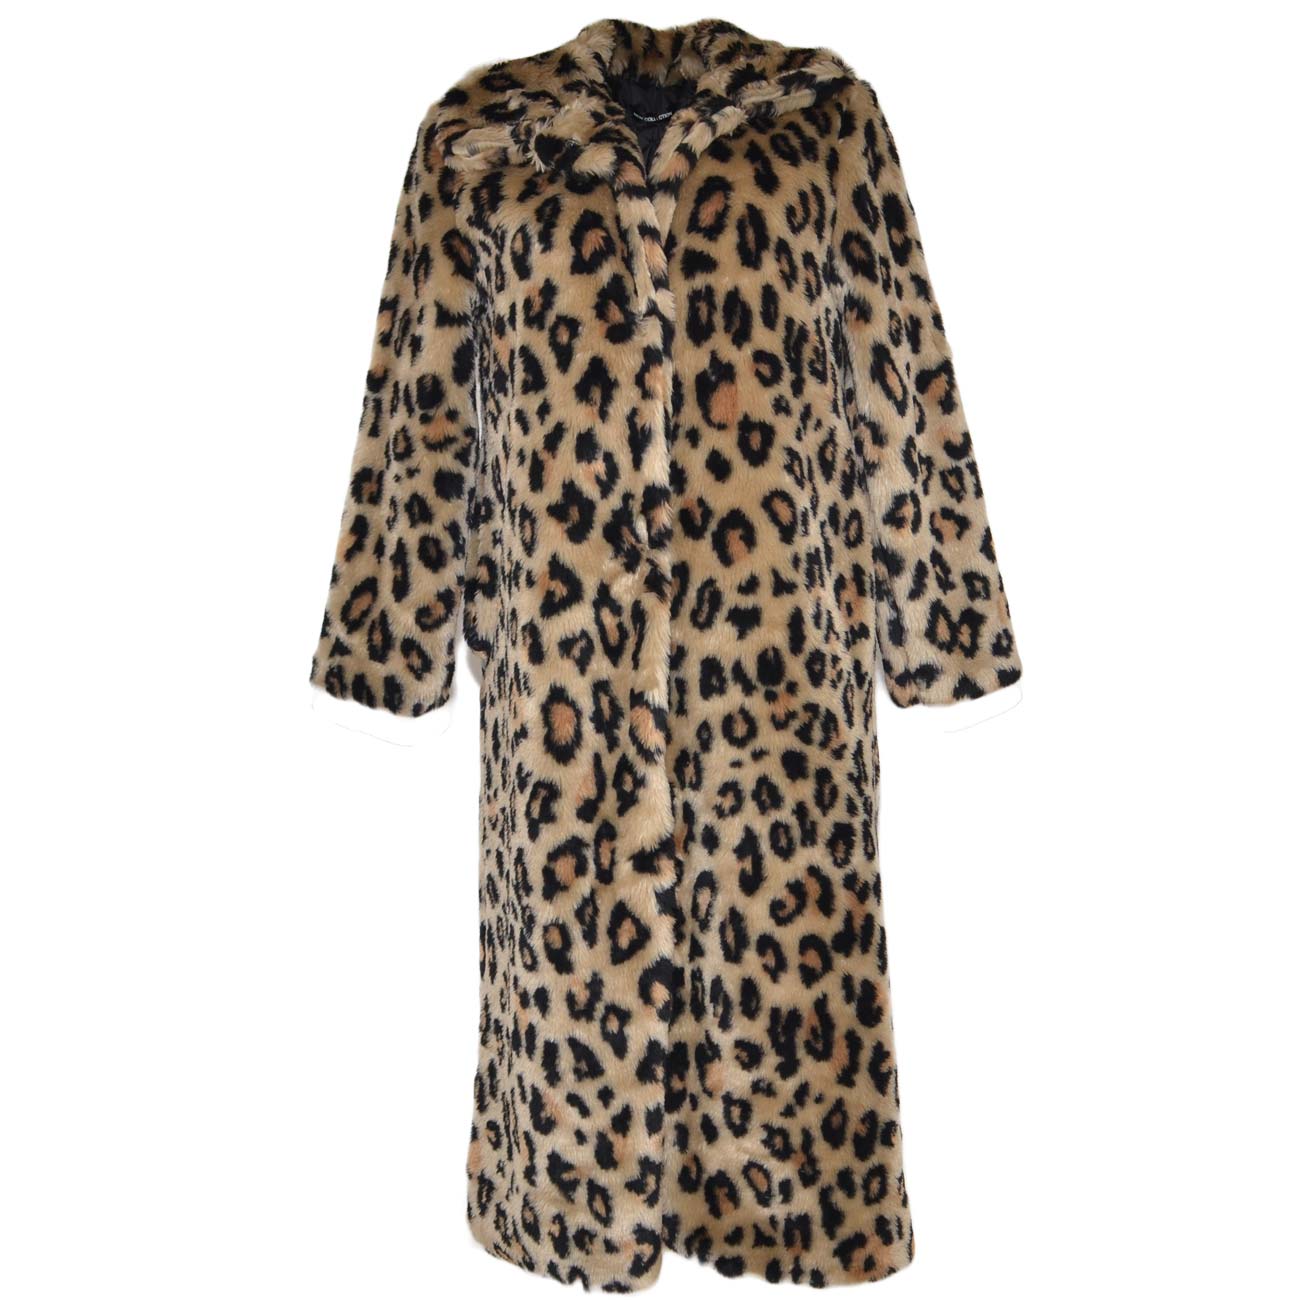 Pelliccia giacca ecologica donna leopardata lunga trend morbida